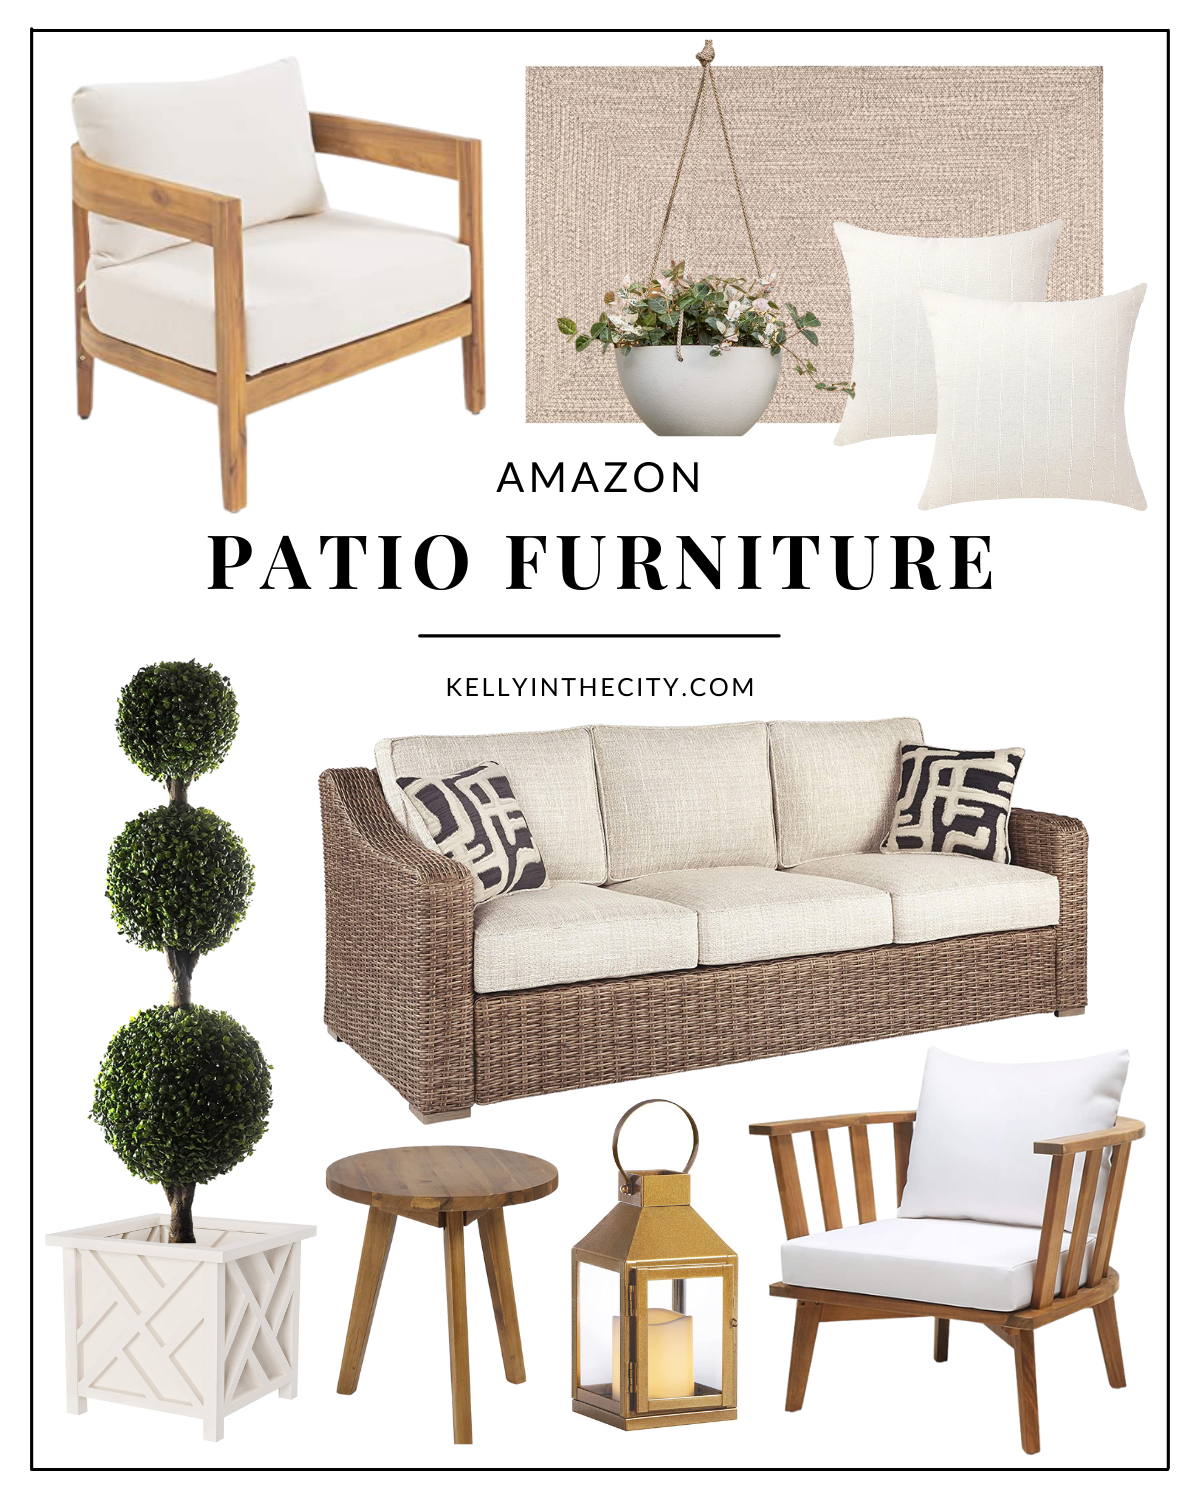 Amazon Patio Furniture and Decor